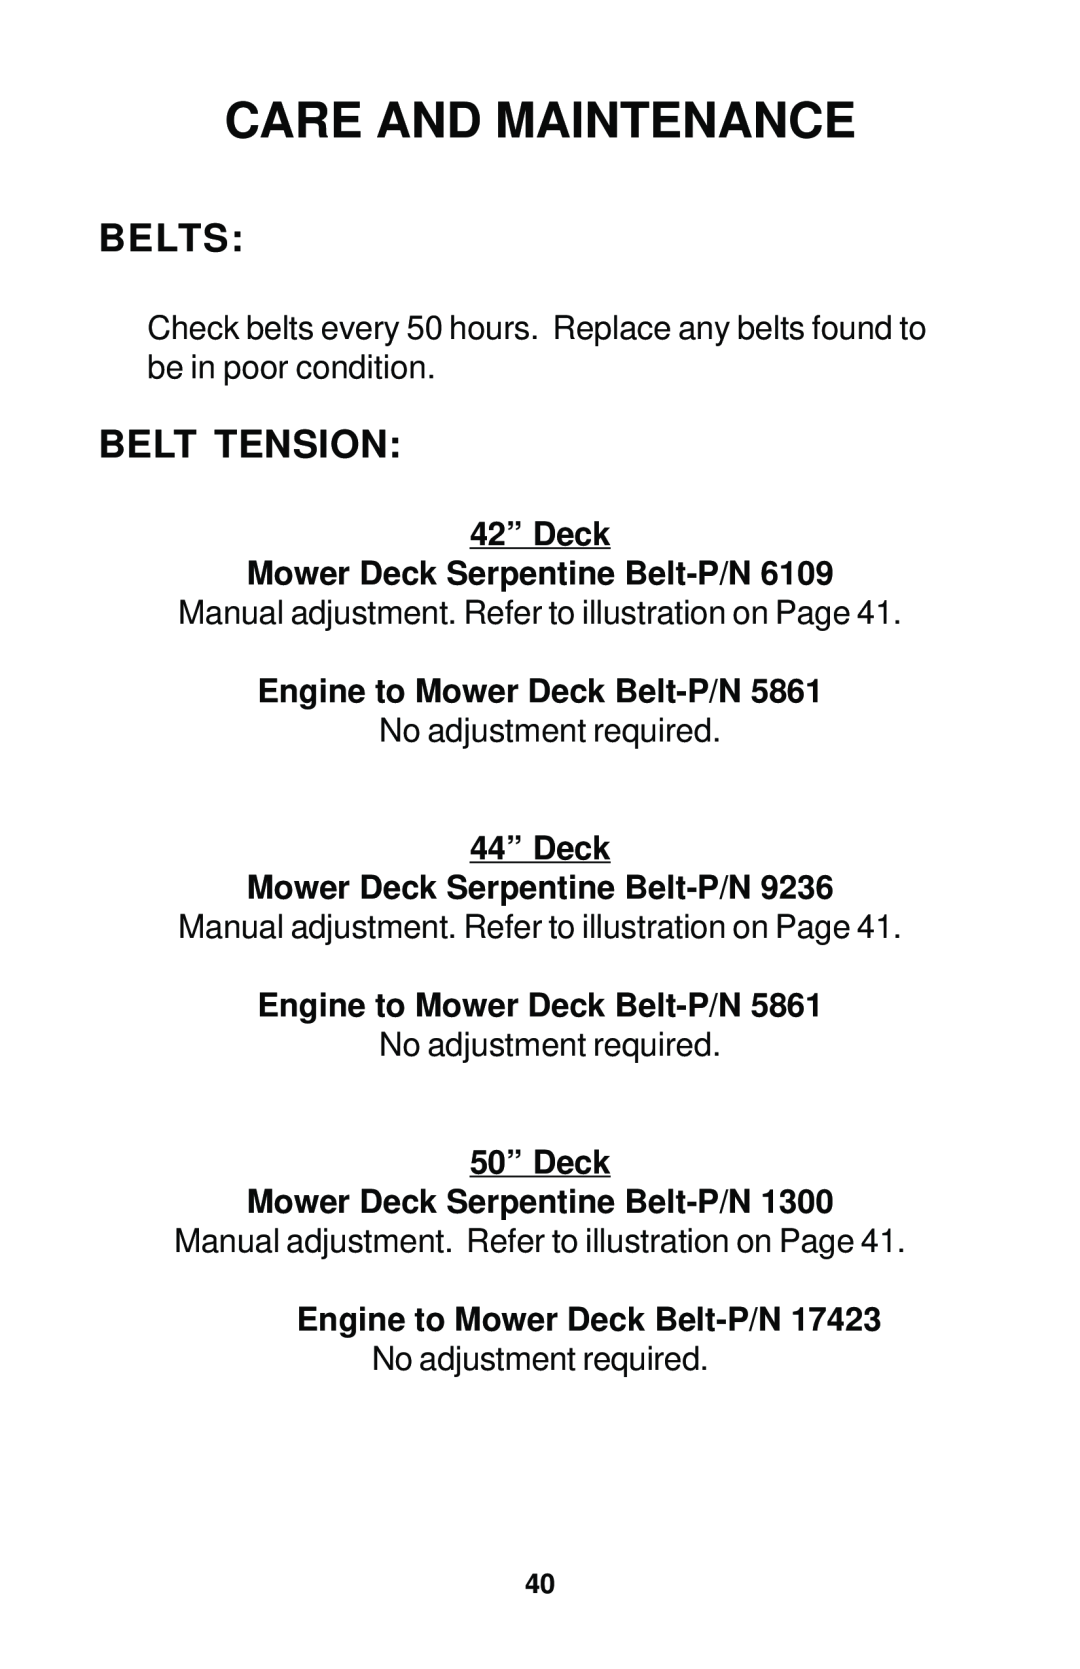 Dixon 42, 44, 50, 44 MAG, 50 MAG manual Belts, Belt Tension, Care And Maintenance 